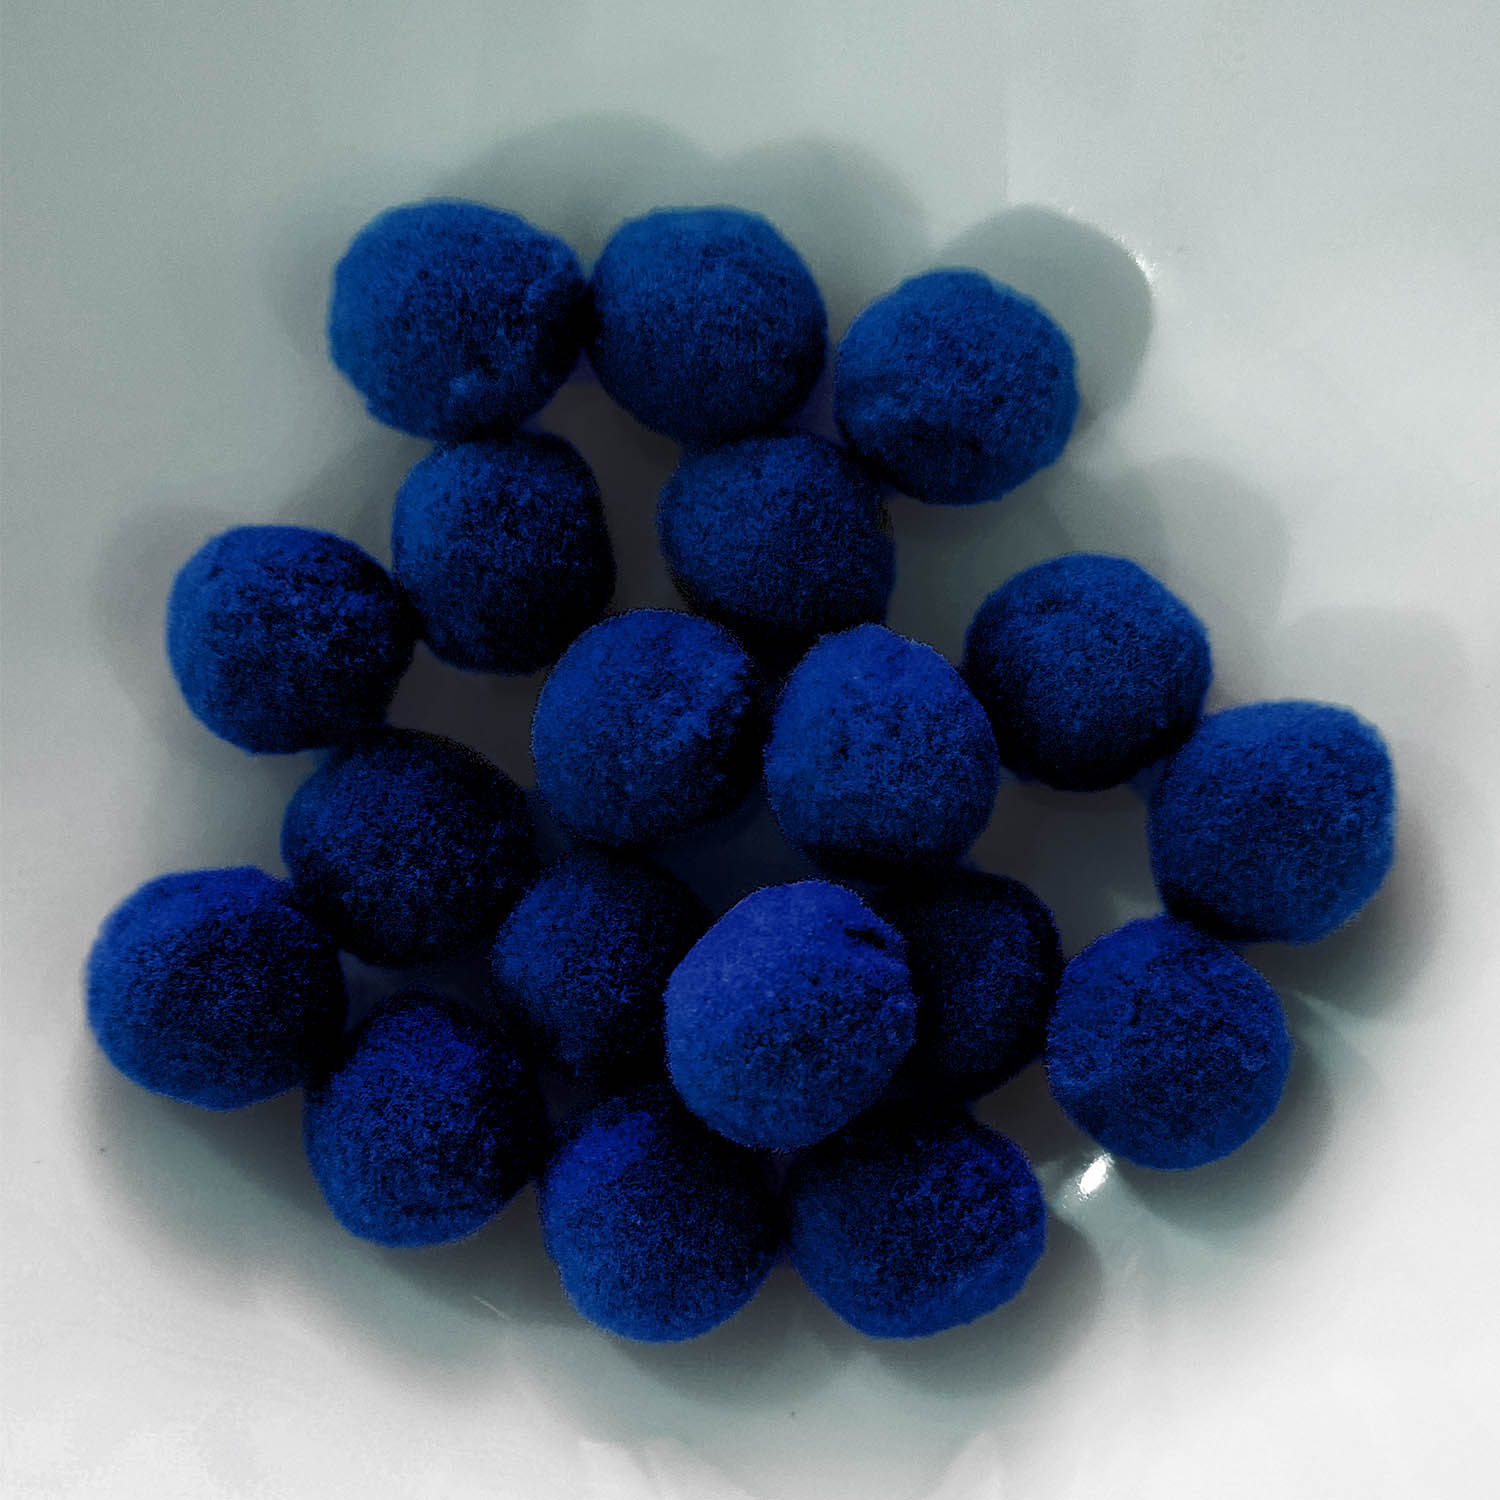 PomPon / Bälle aus Baumwolle - 12 mm / 40er Set - Blau dunkel / Königsblau